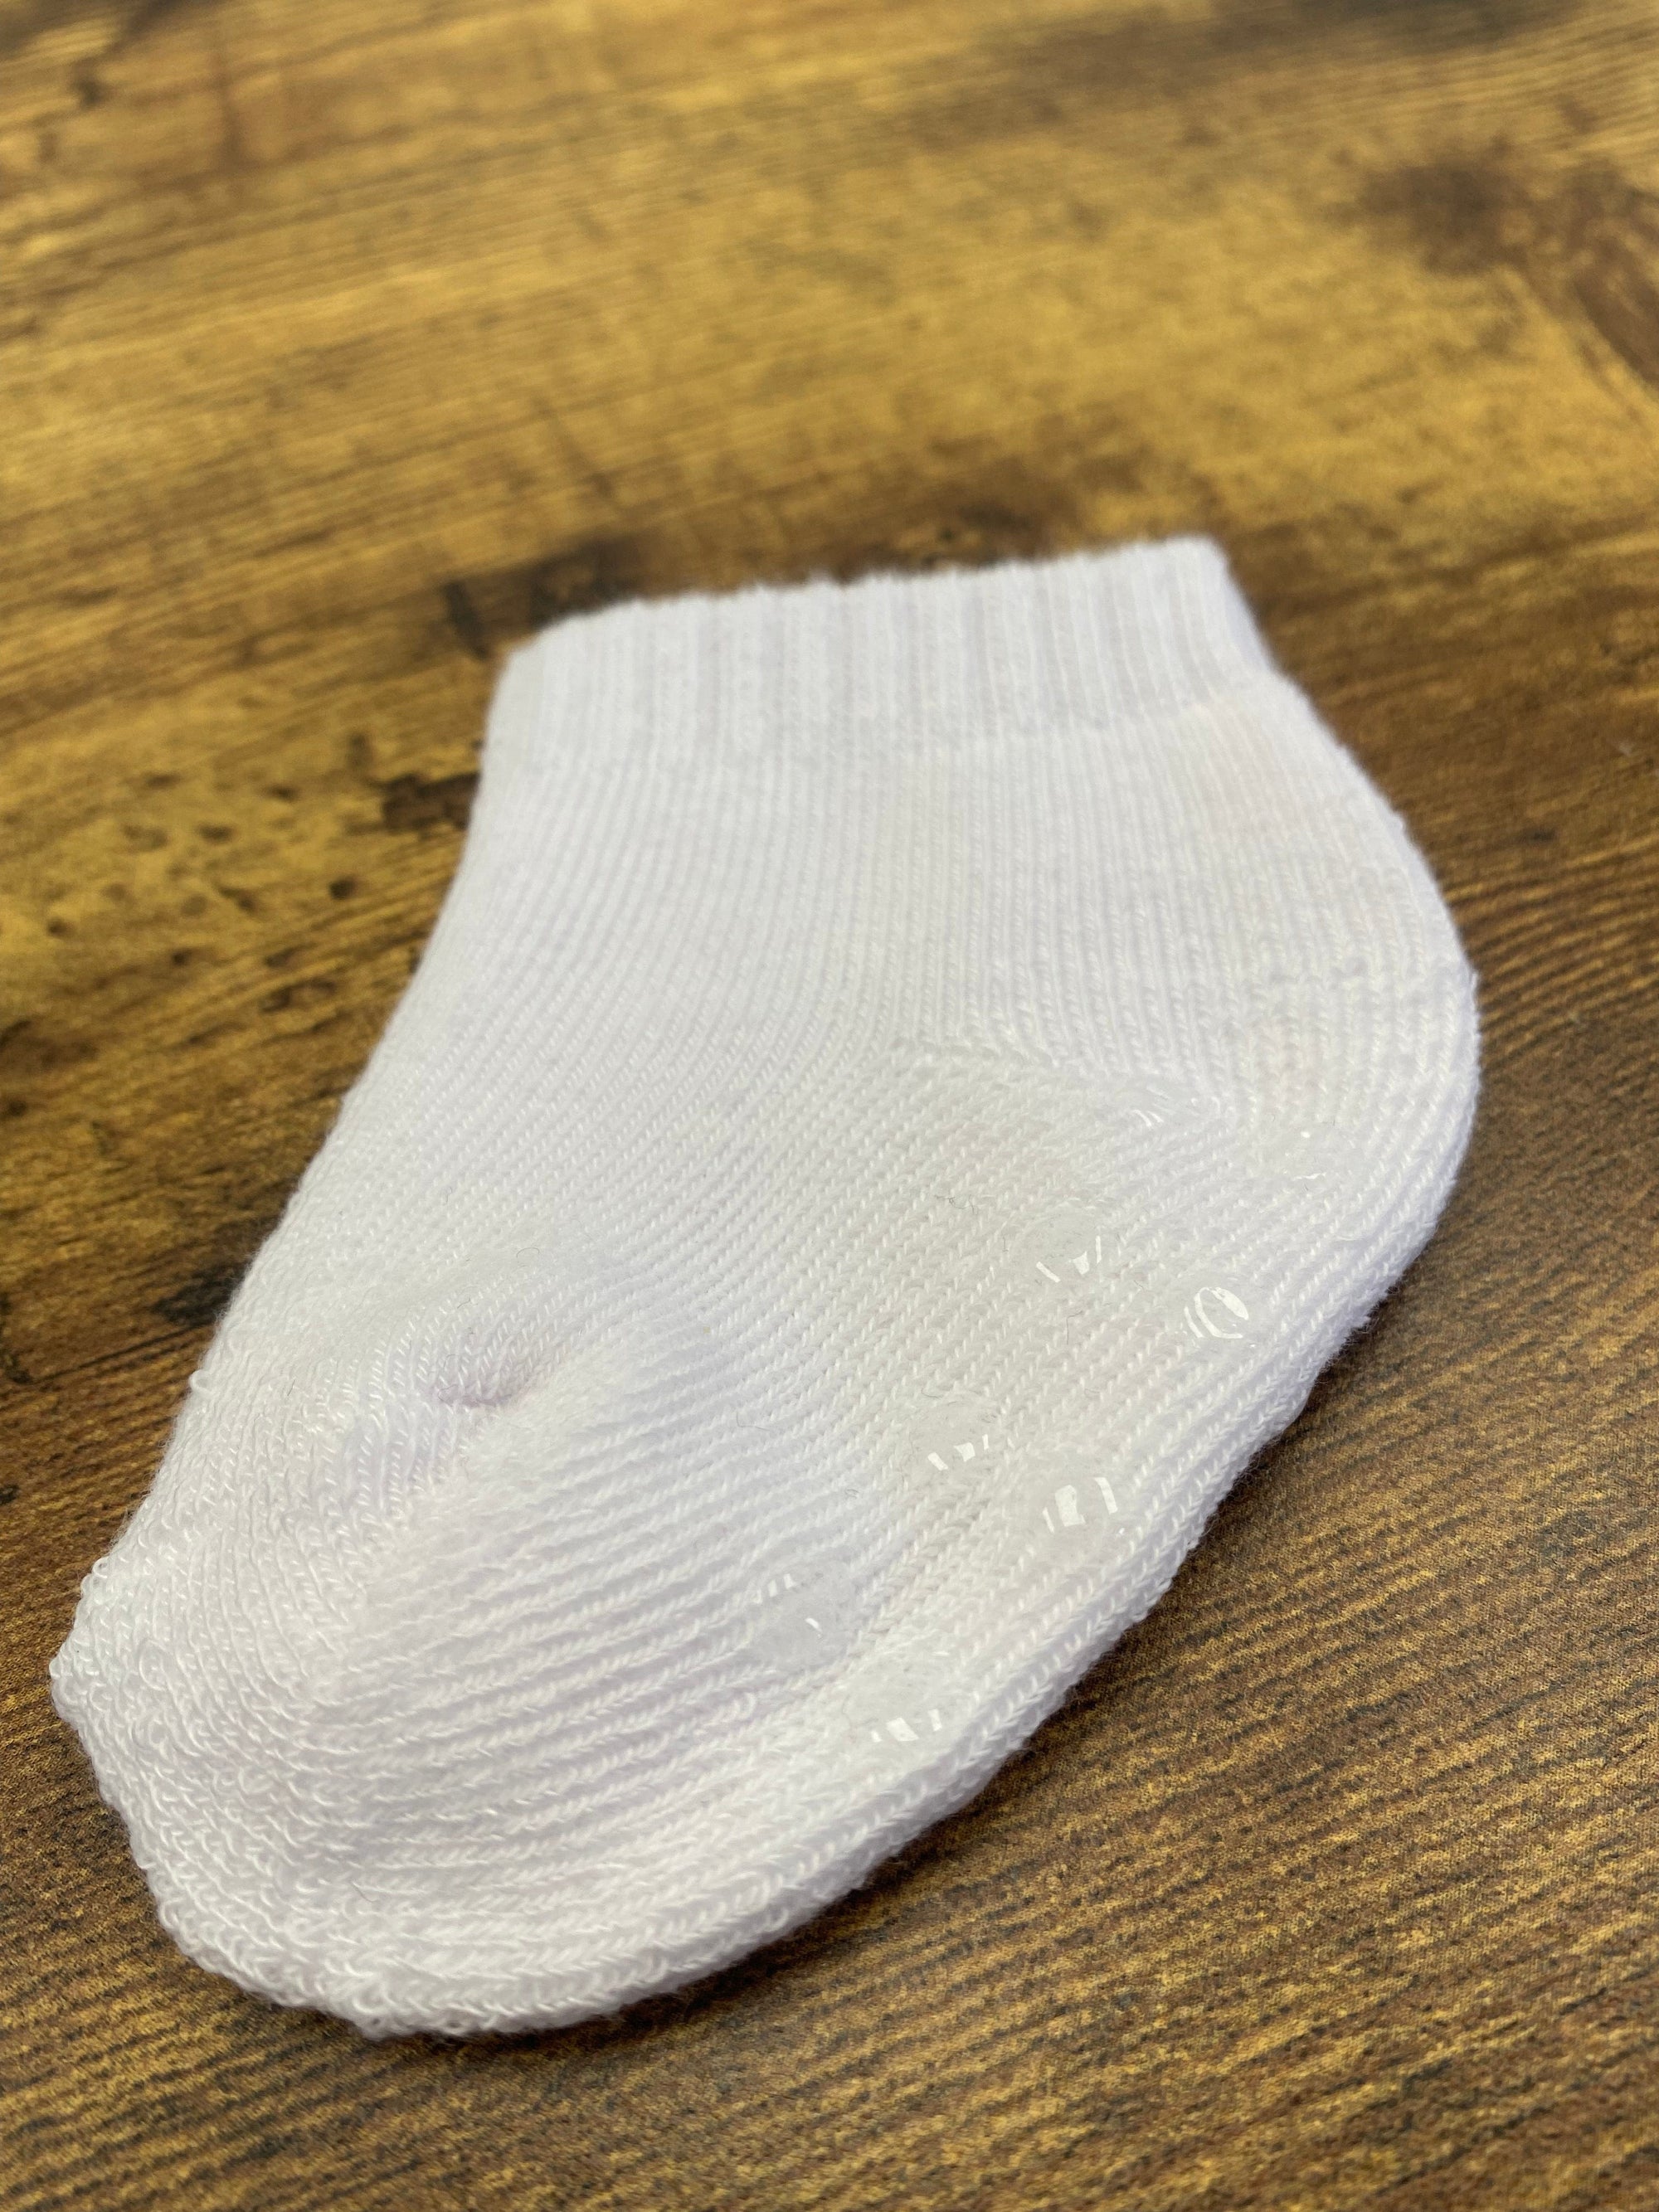  Silky Toes Baby Boy Girl Infant Socks 6Pk (6-12M